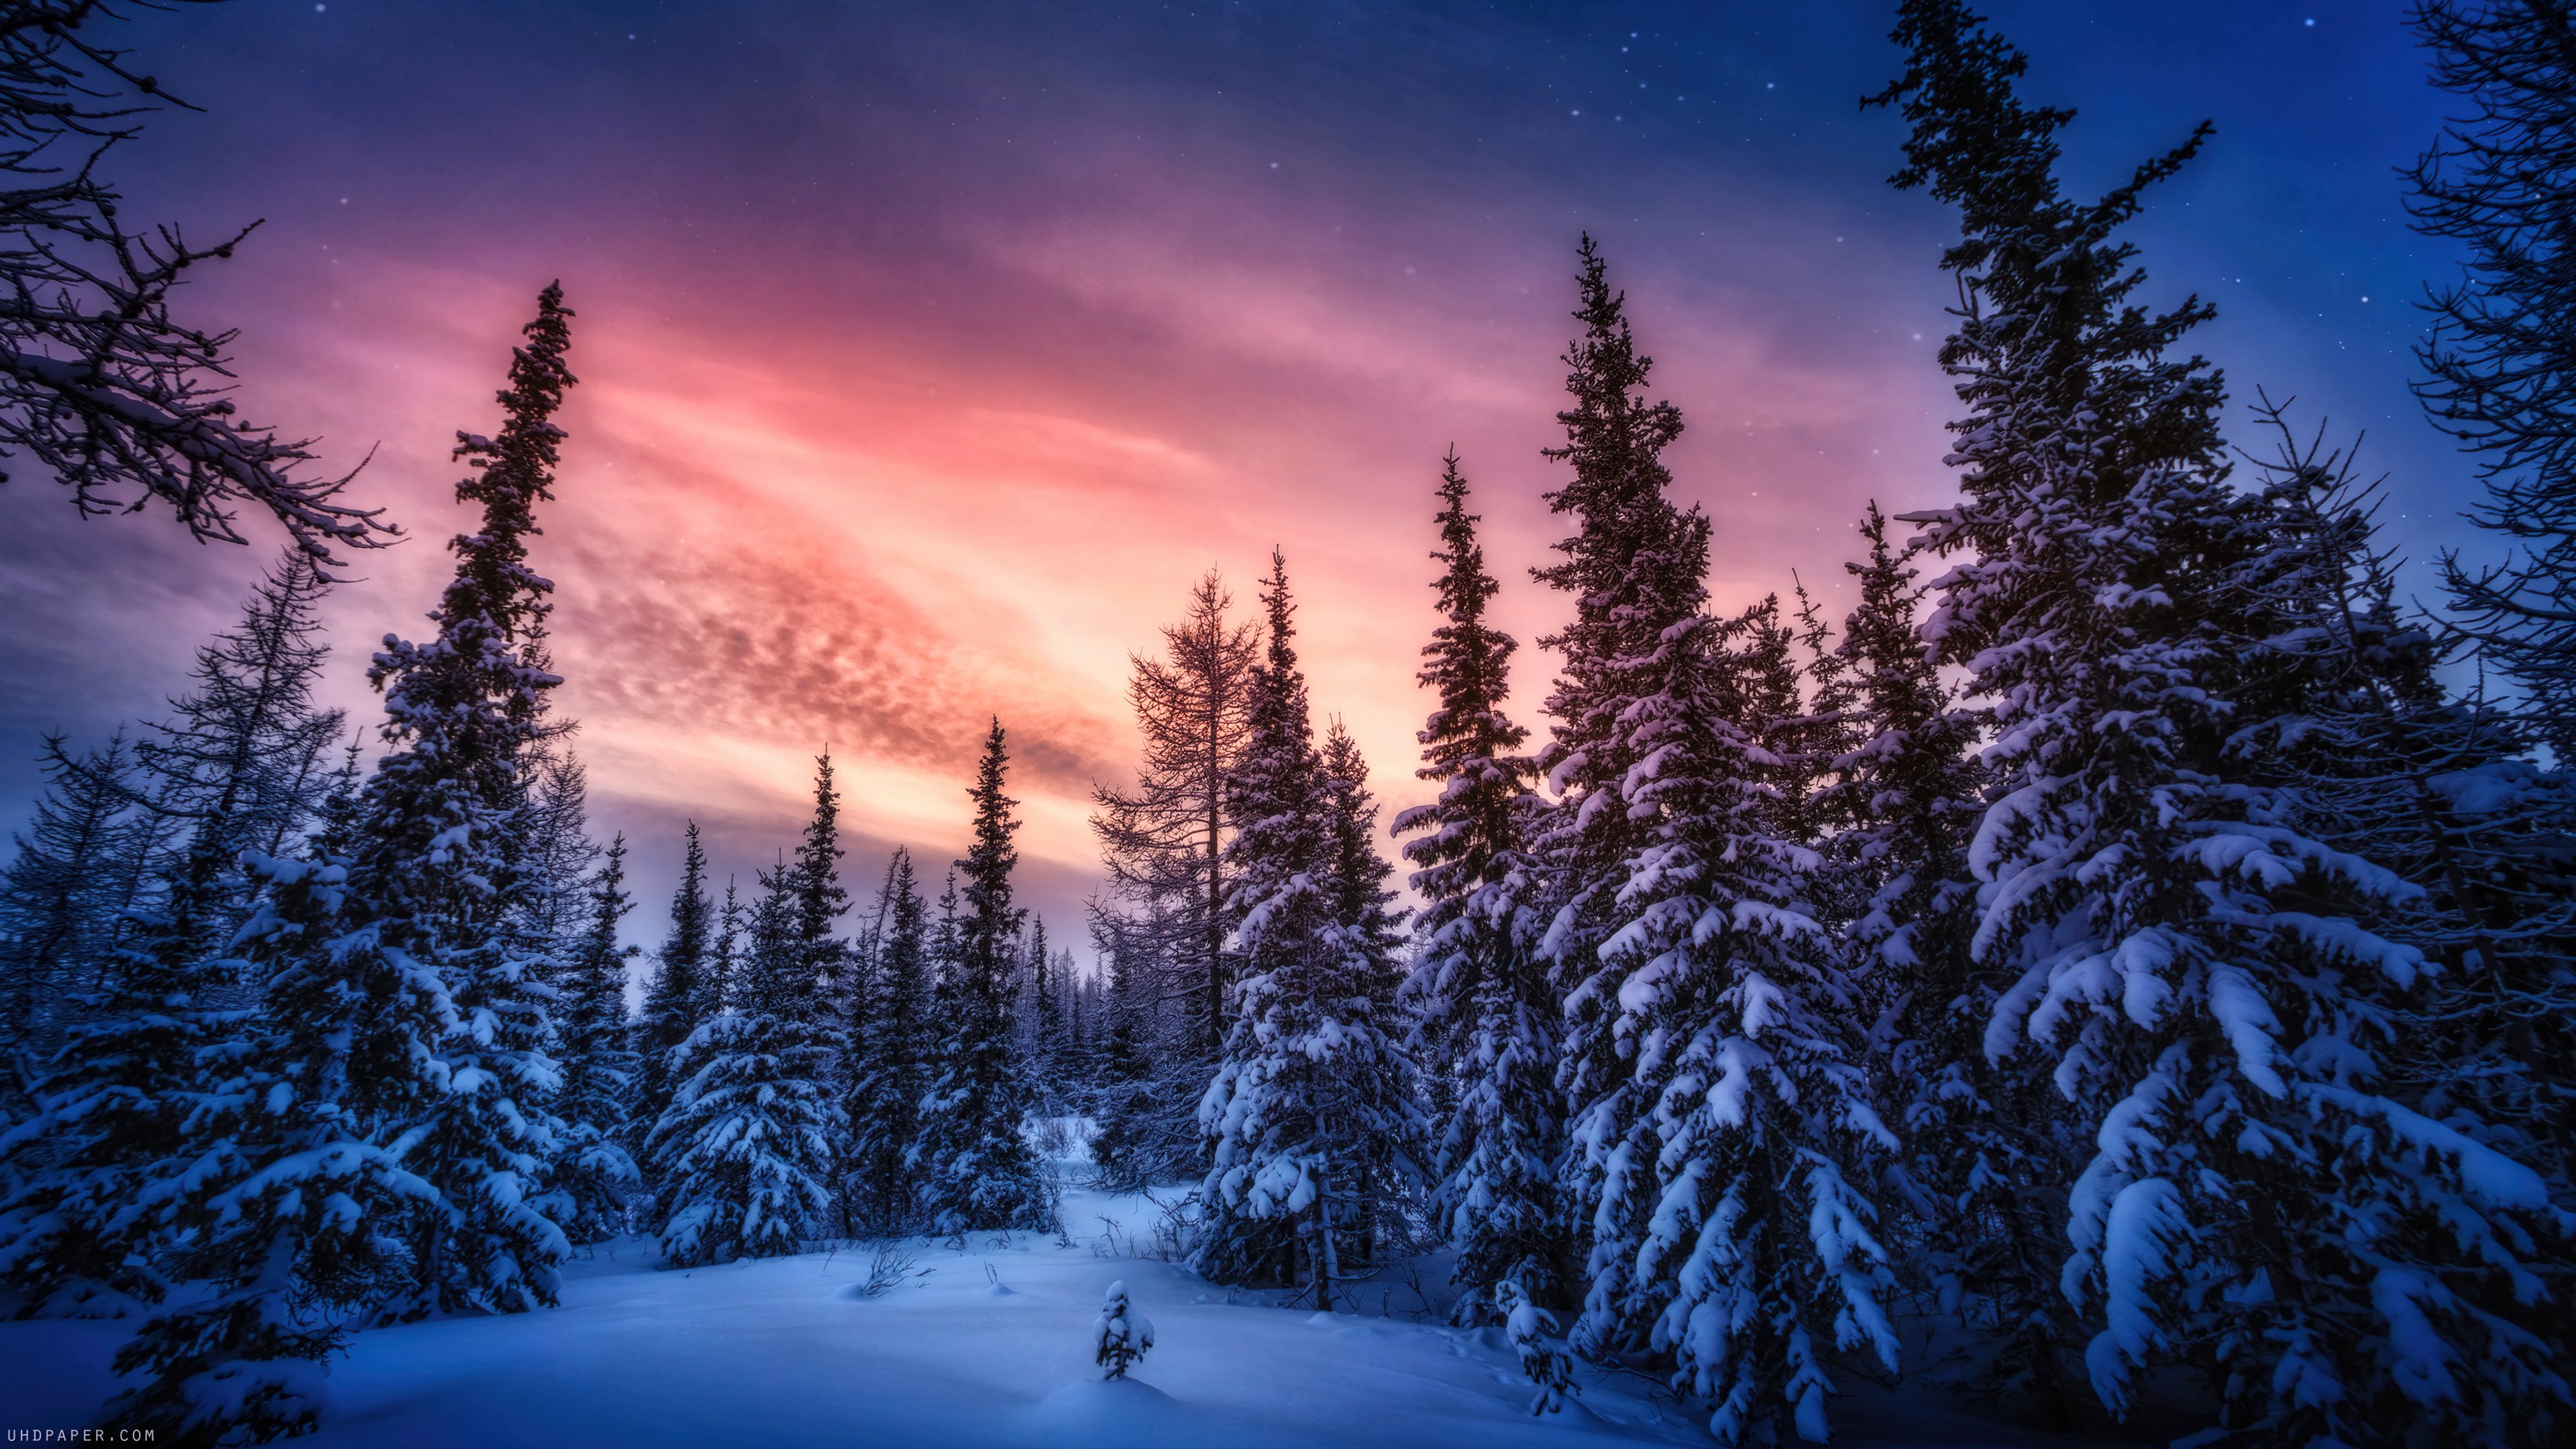 Forest in the winter Wallpaper 4k Ultra HD